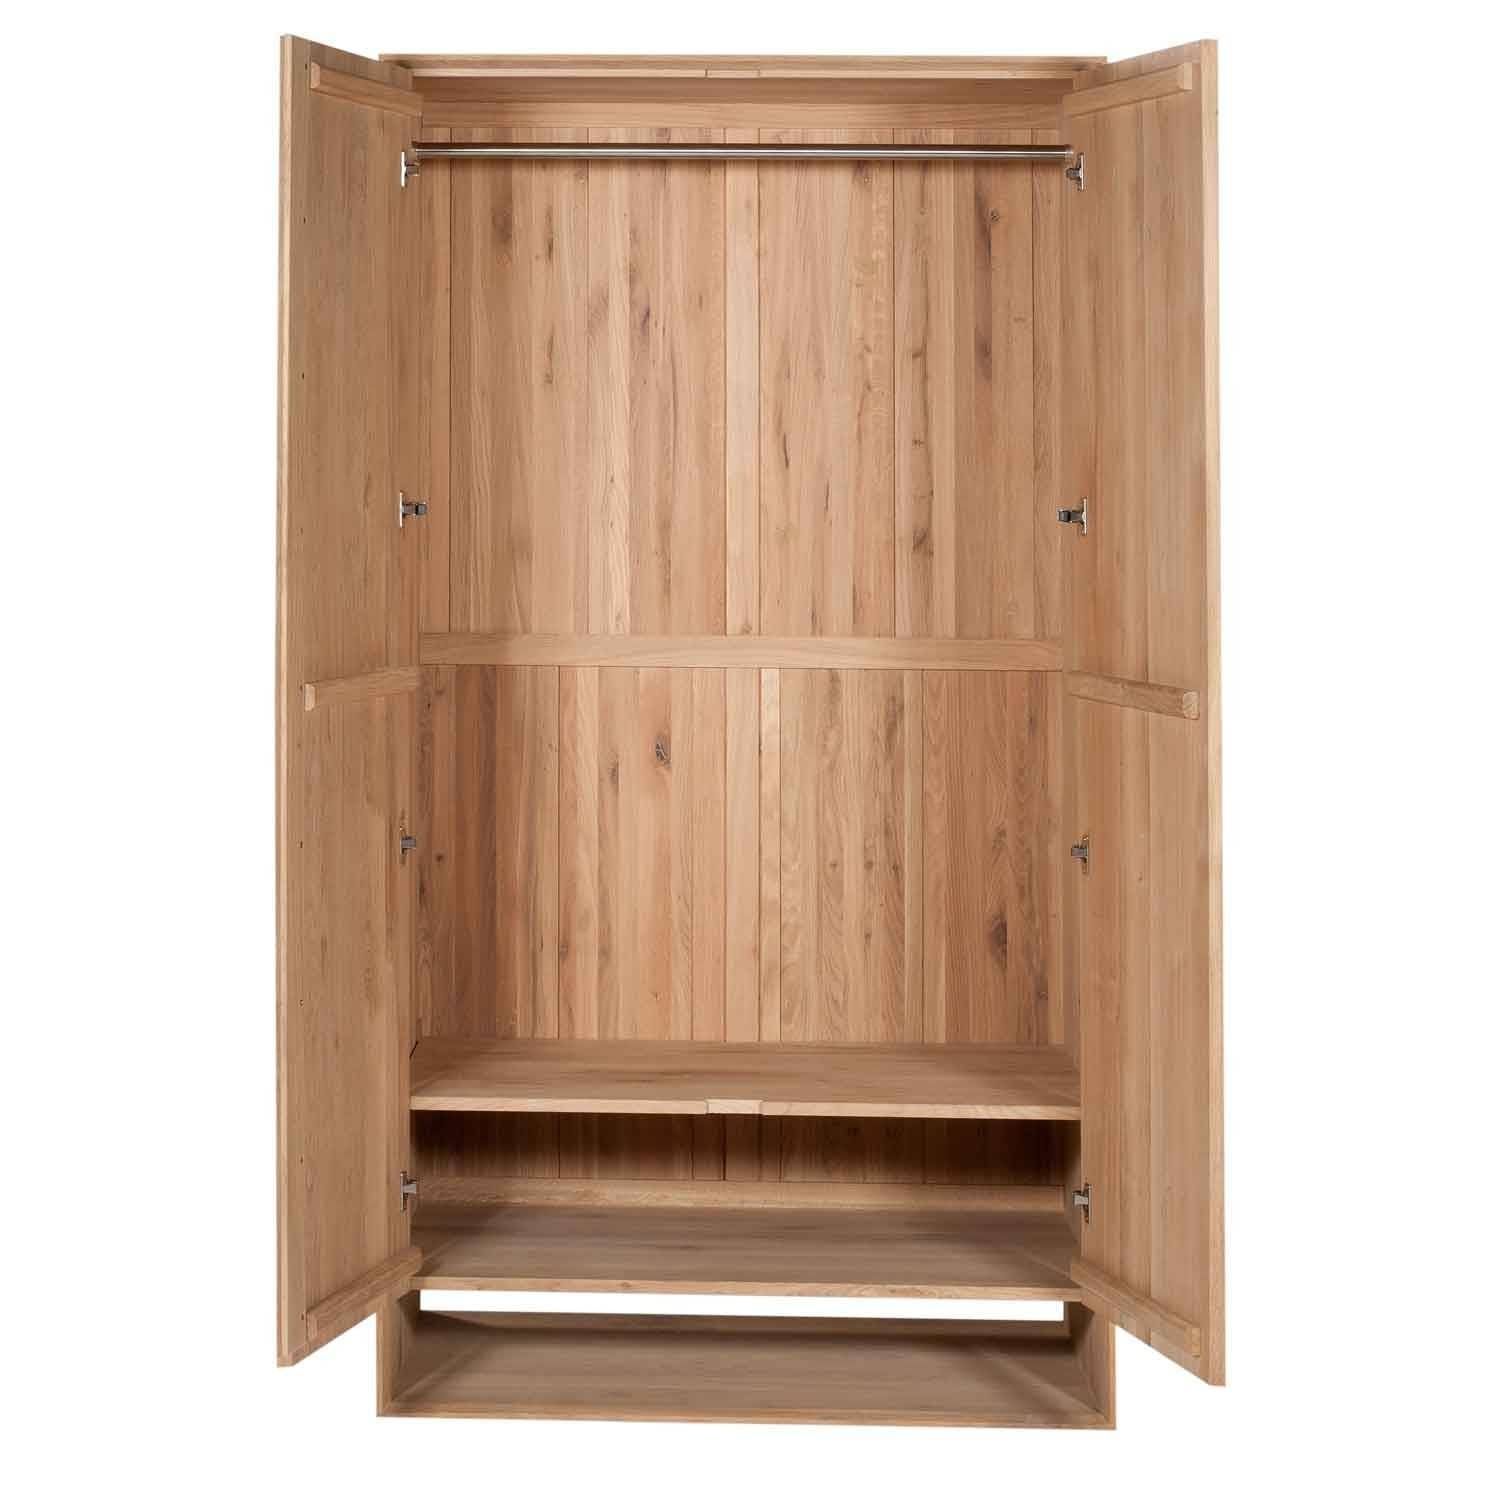 Ethnicraft Nordic Oak 2 Door Wardrobe | Solid Wood Furniture In Wood Wardrobes (View 4 of 15)